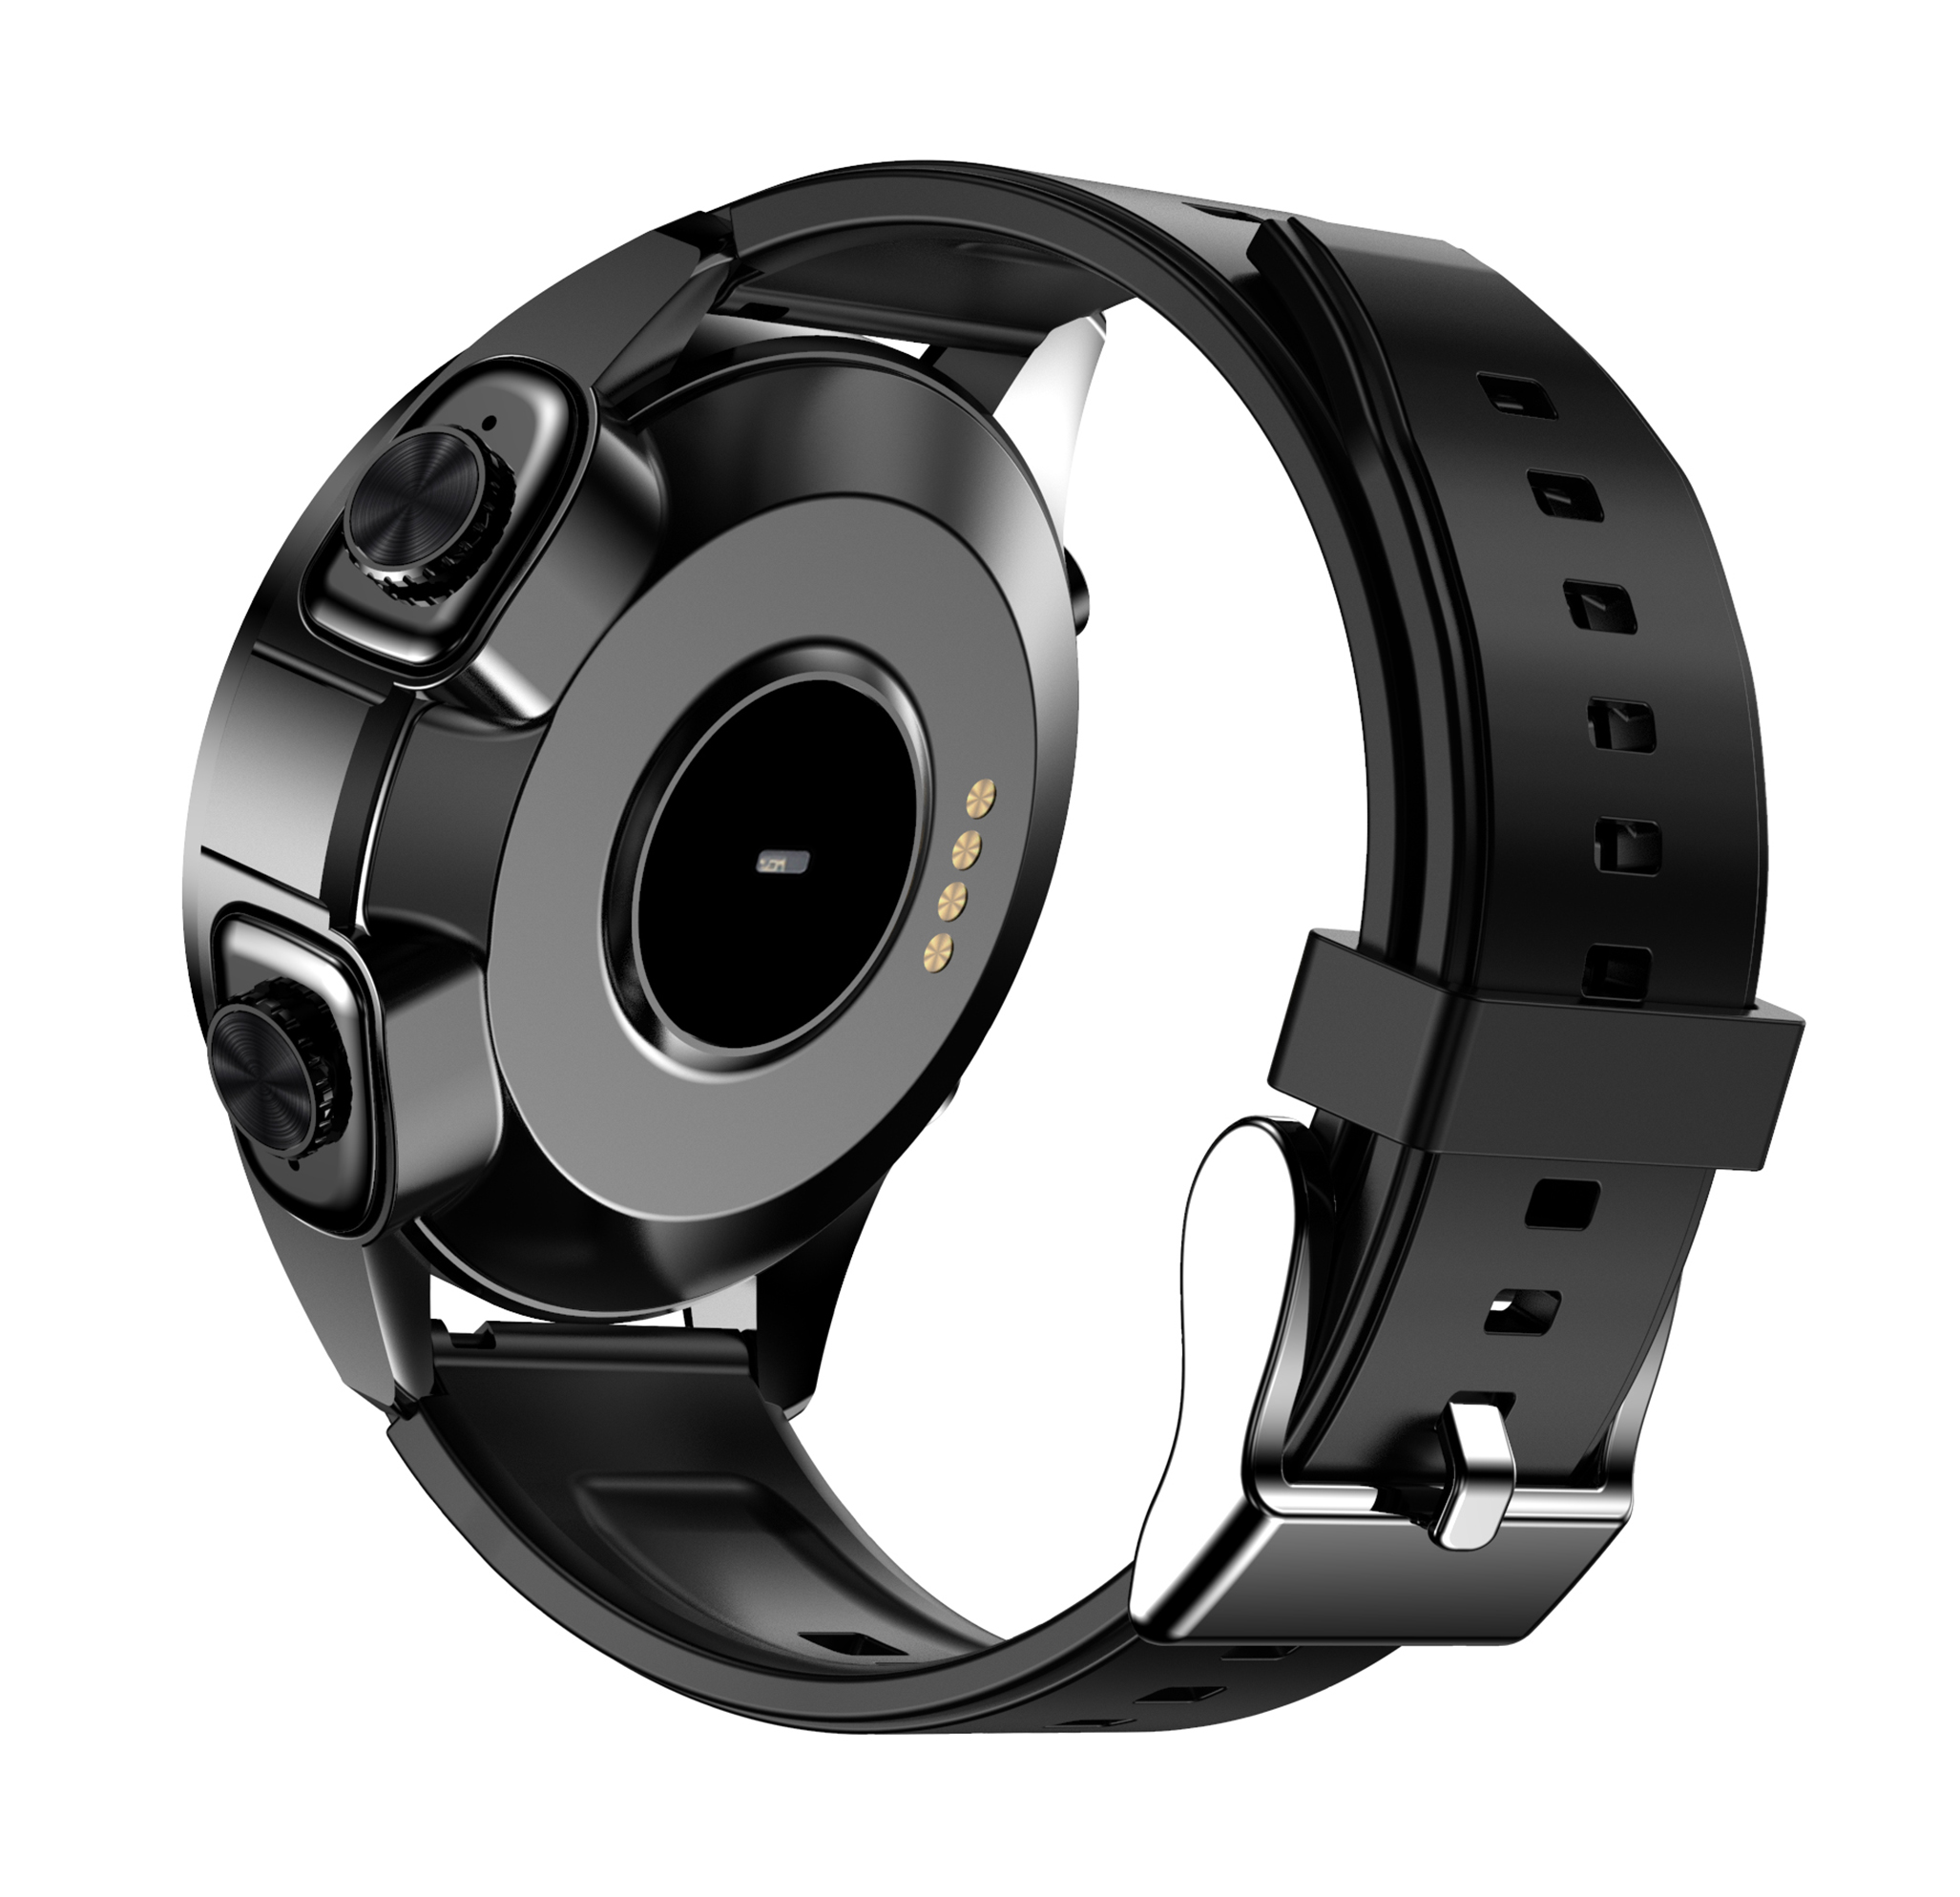 Nouveau JM03 Smart WatchExposive Product Sport GPS Fitness Watch Smart Bracelet